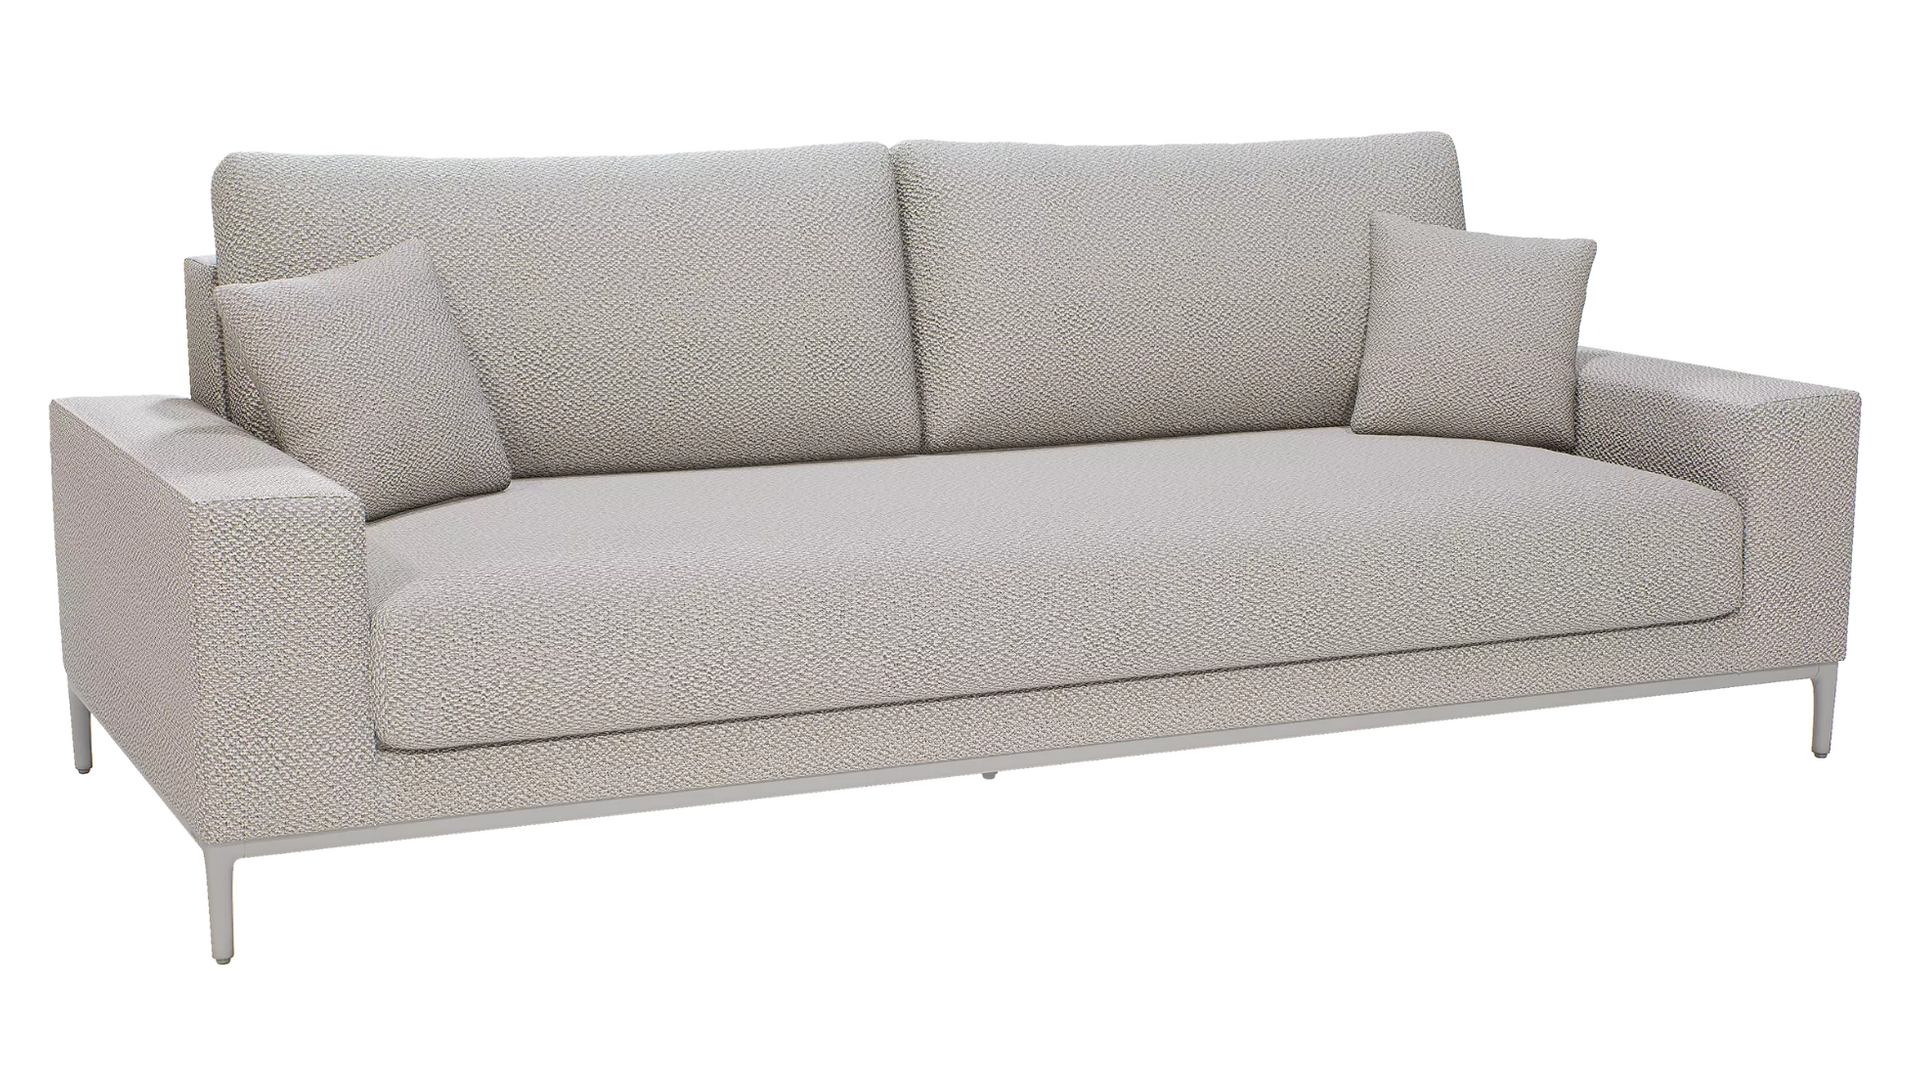 Manutti Zendo Sense 2,5 seater sofa 2-zits bank outdoor HORA Barneveld 1.png